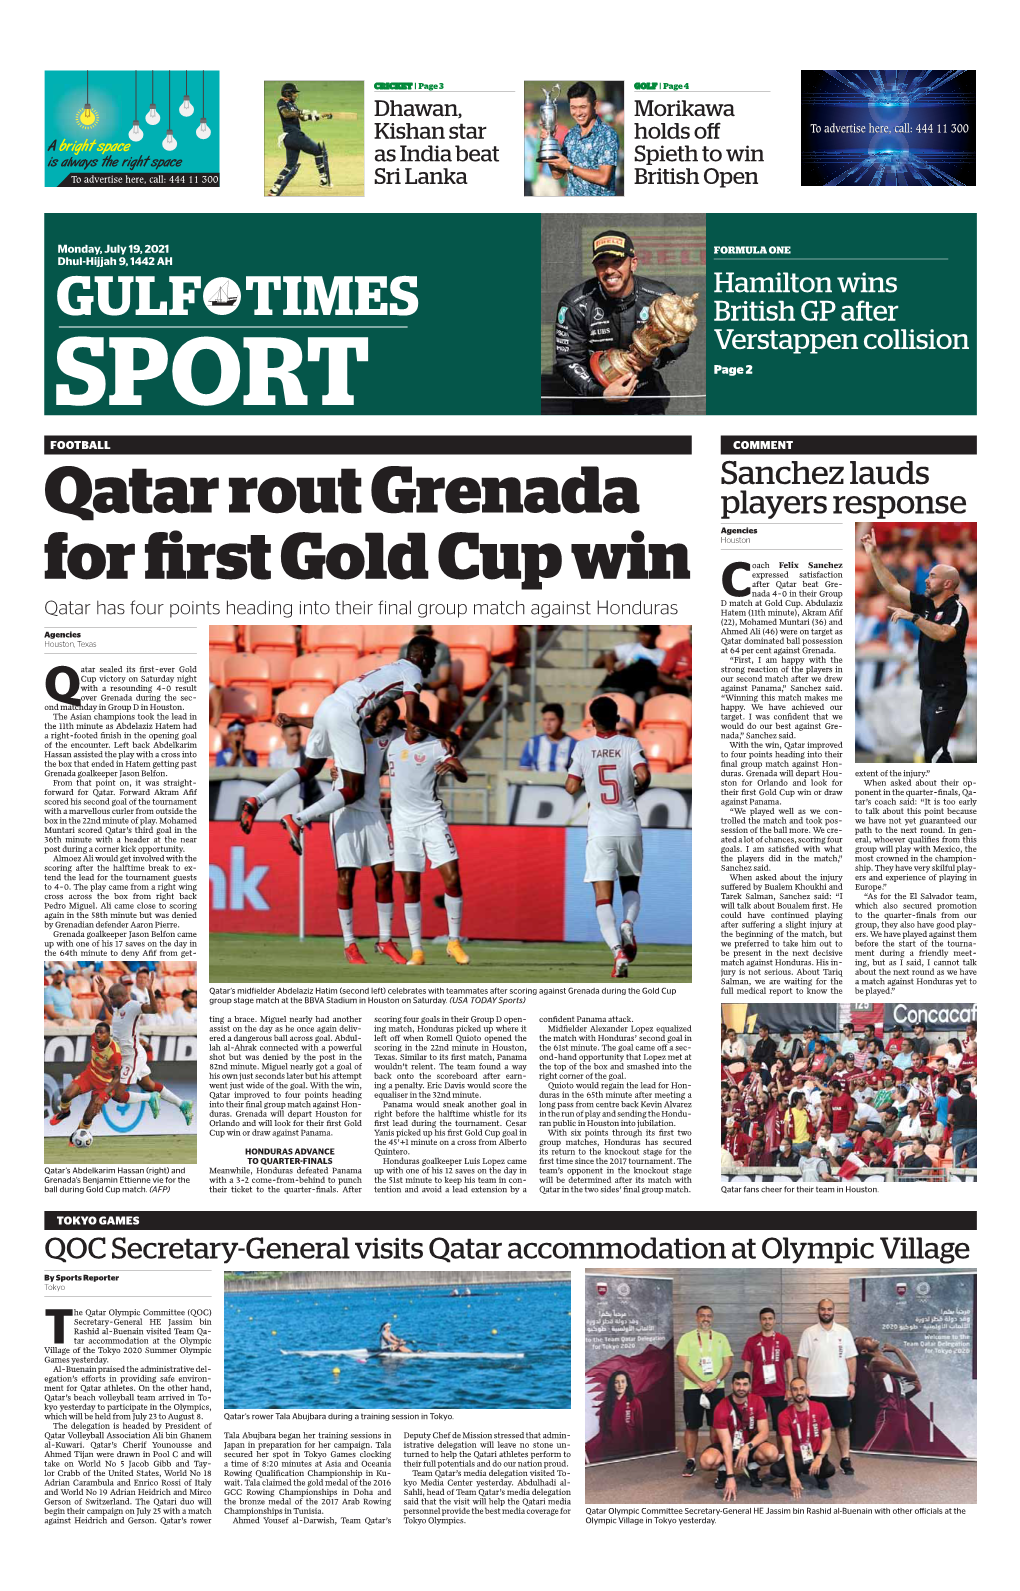 SPORT Page 2 FOOTBALL COMMENT Sanchez Lauds Qatar Rout Grenada Players Response Agencies Houston